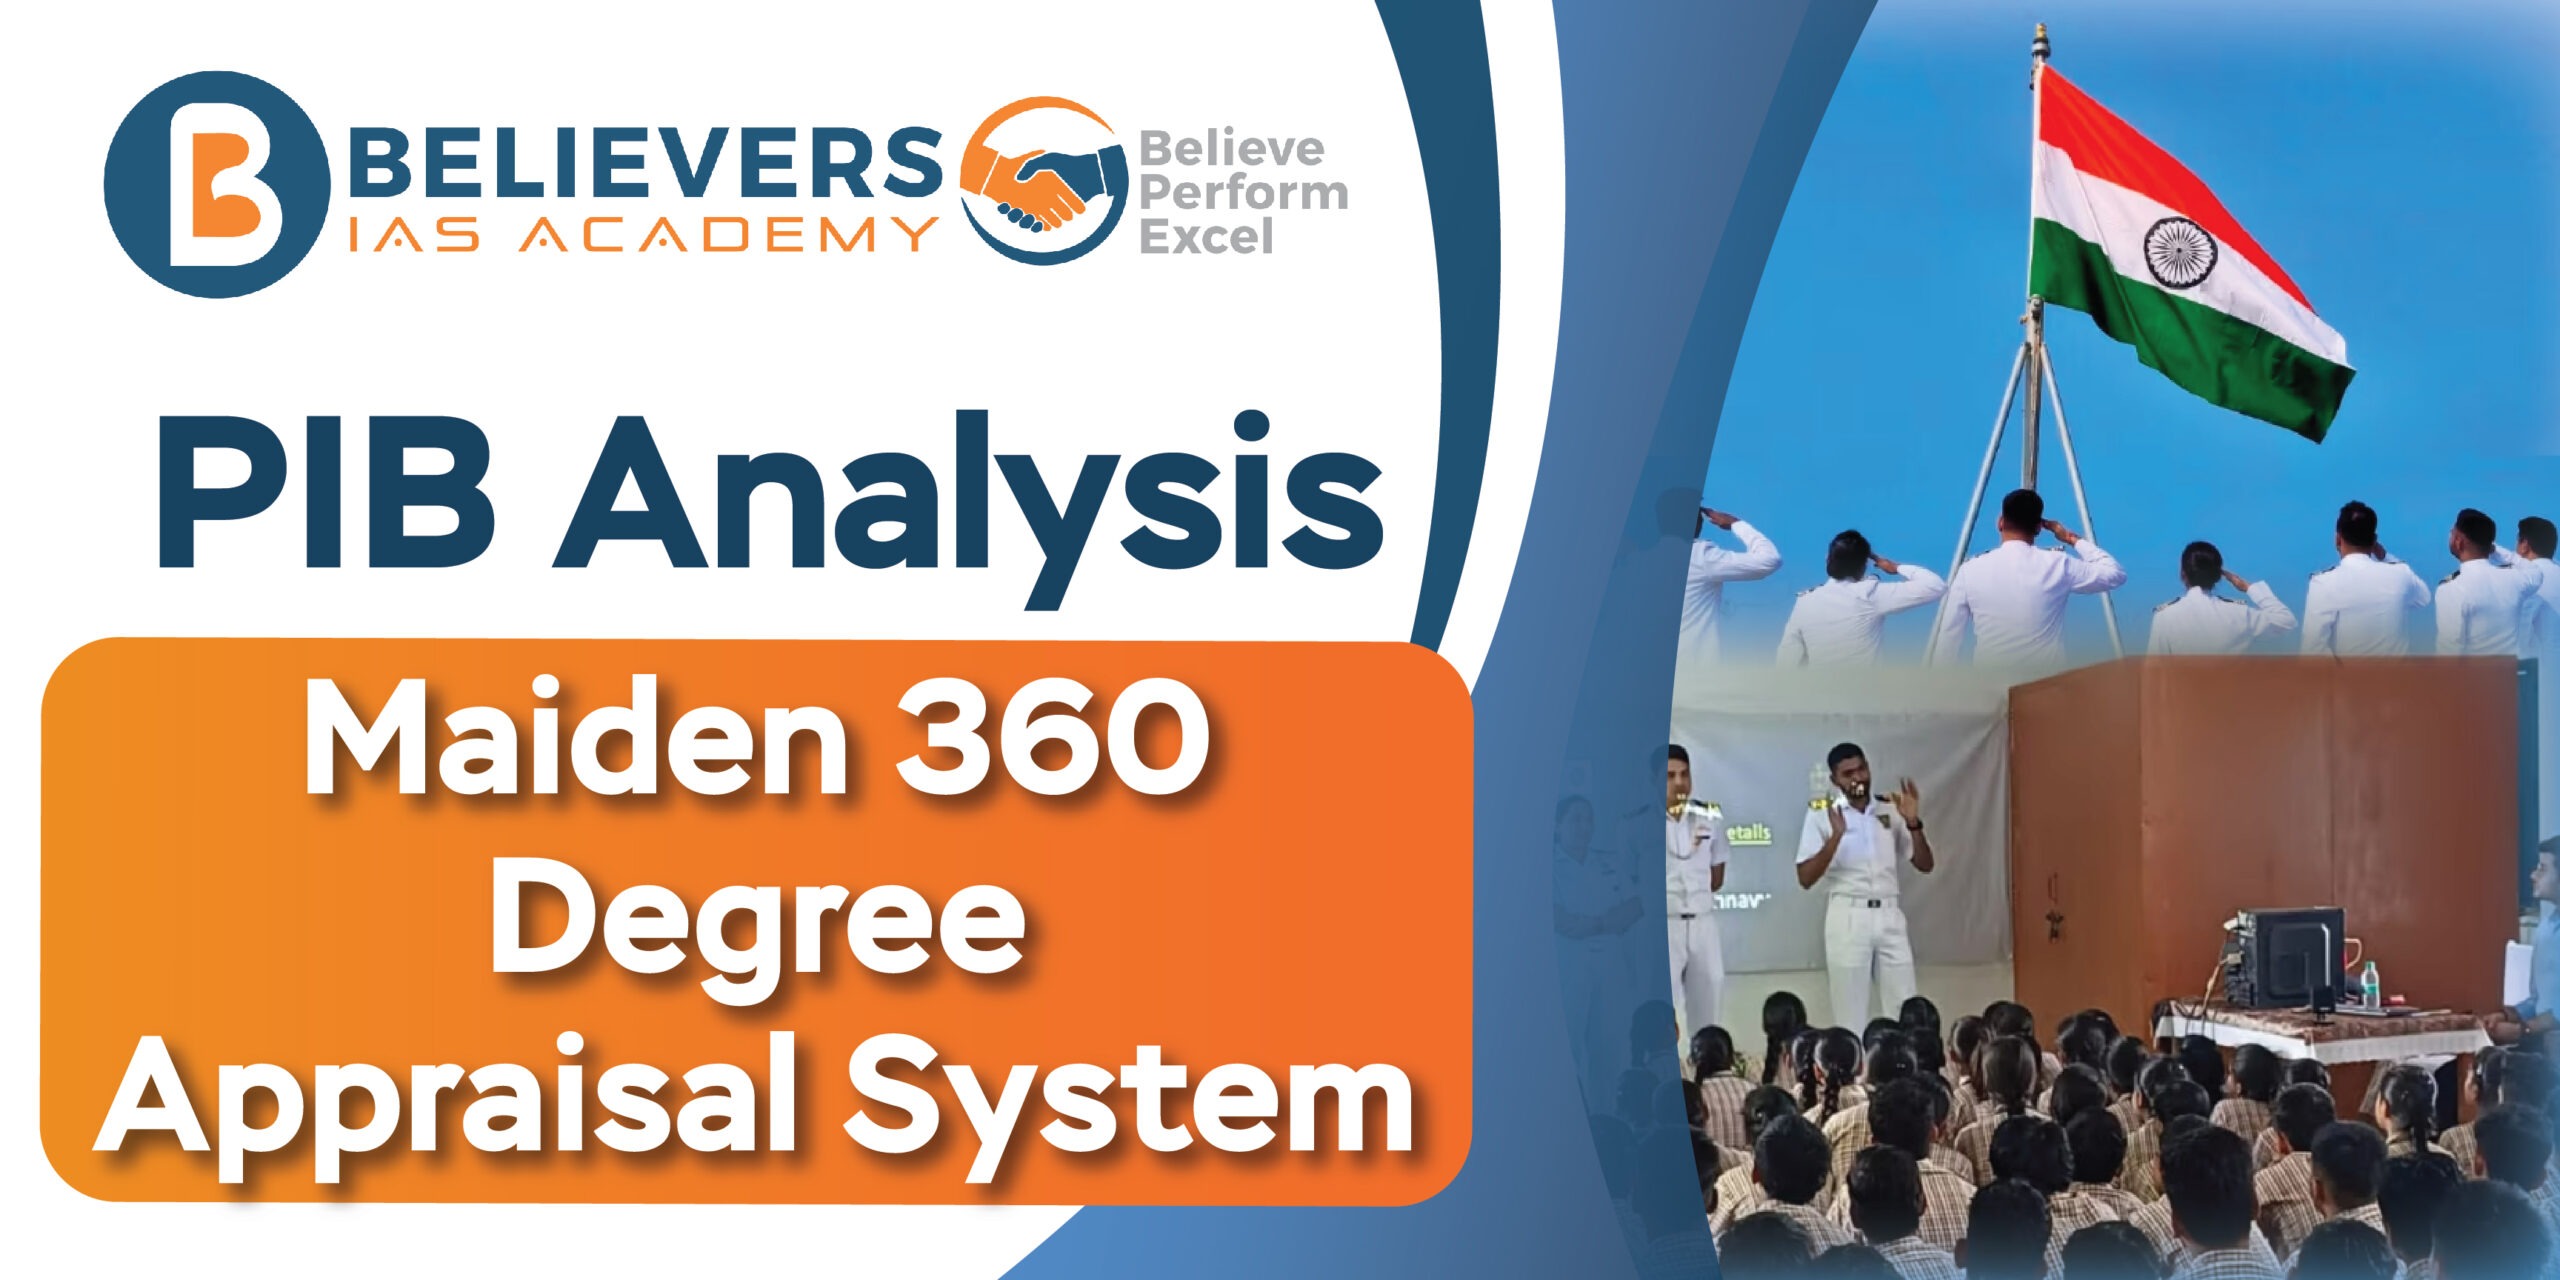 Maiden 360 Degree Appraisal System